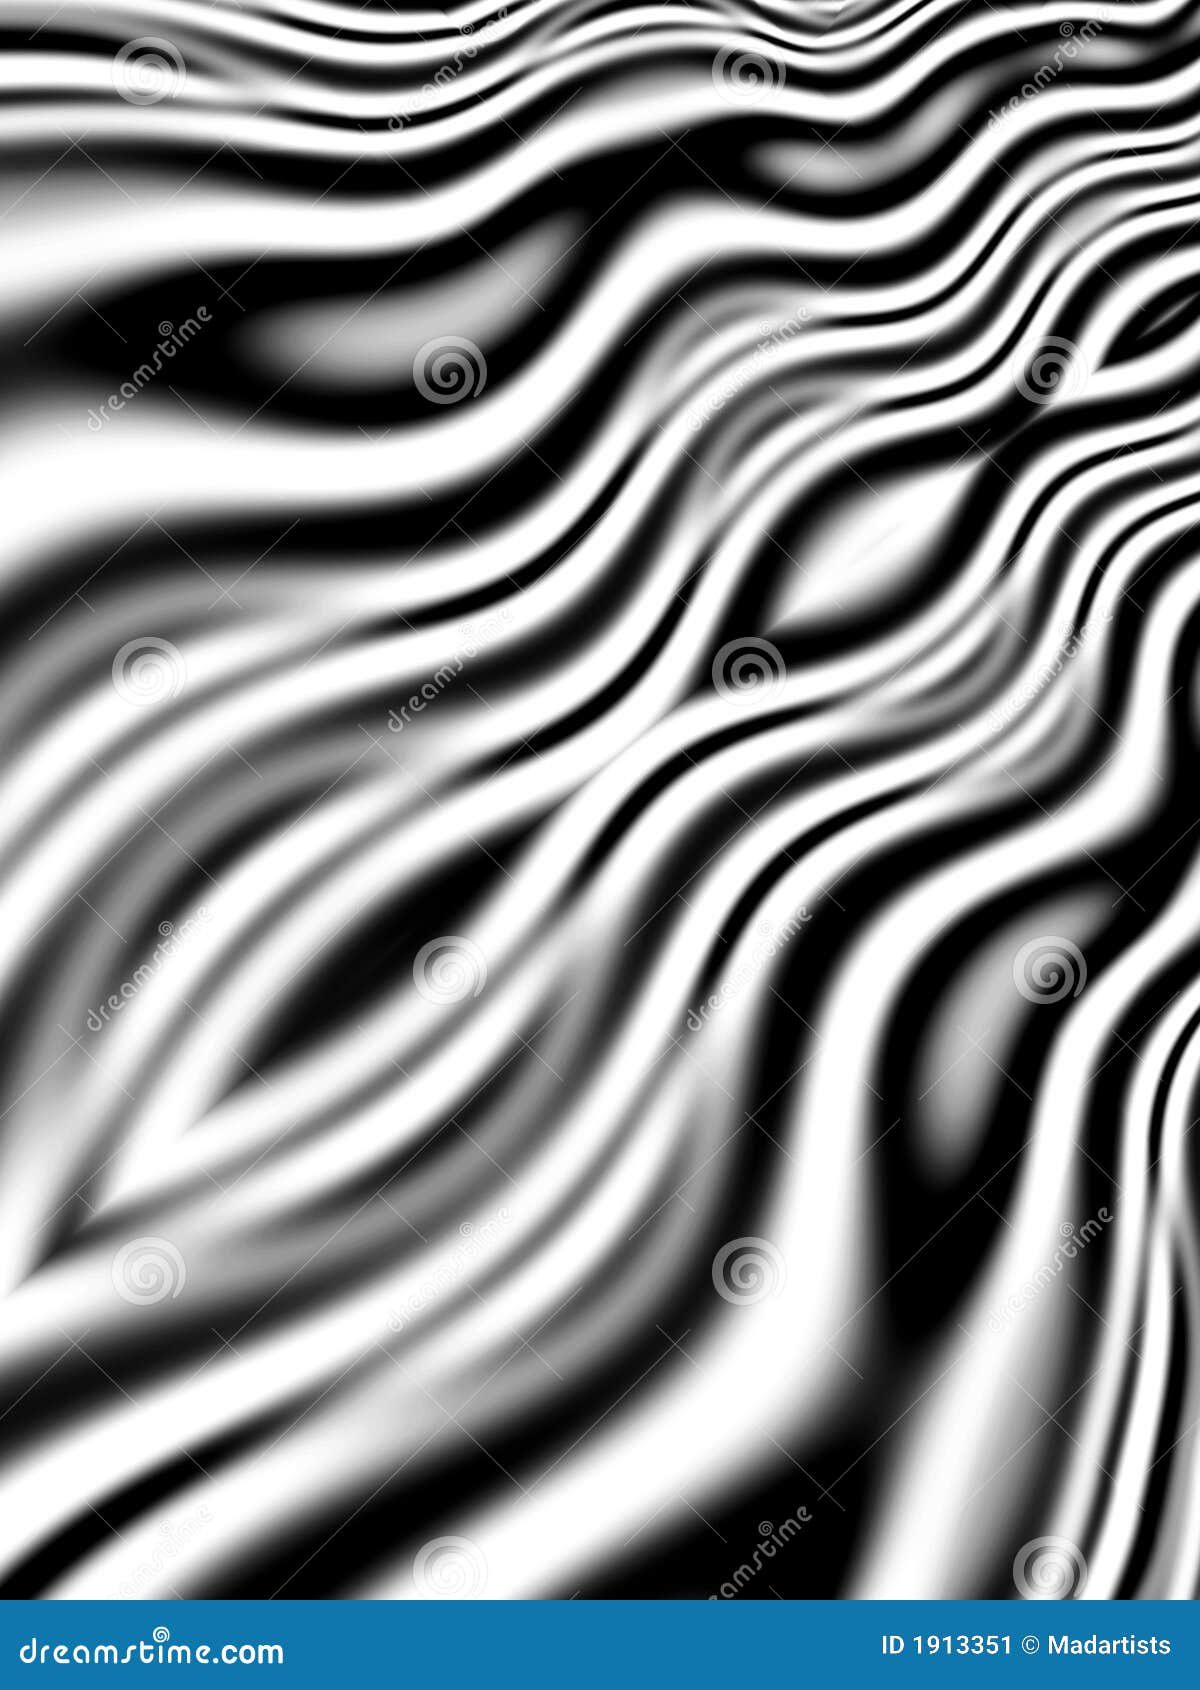 abstract zebra stripes pattern